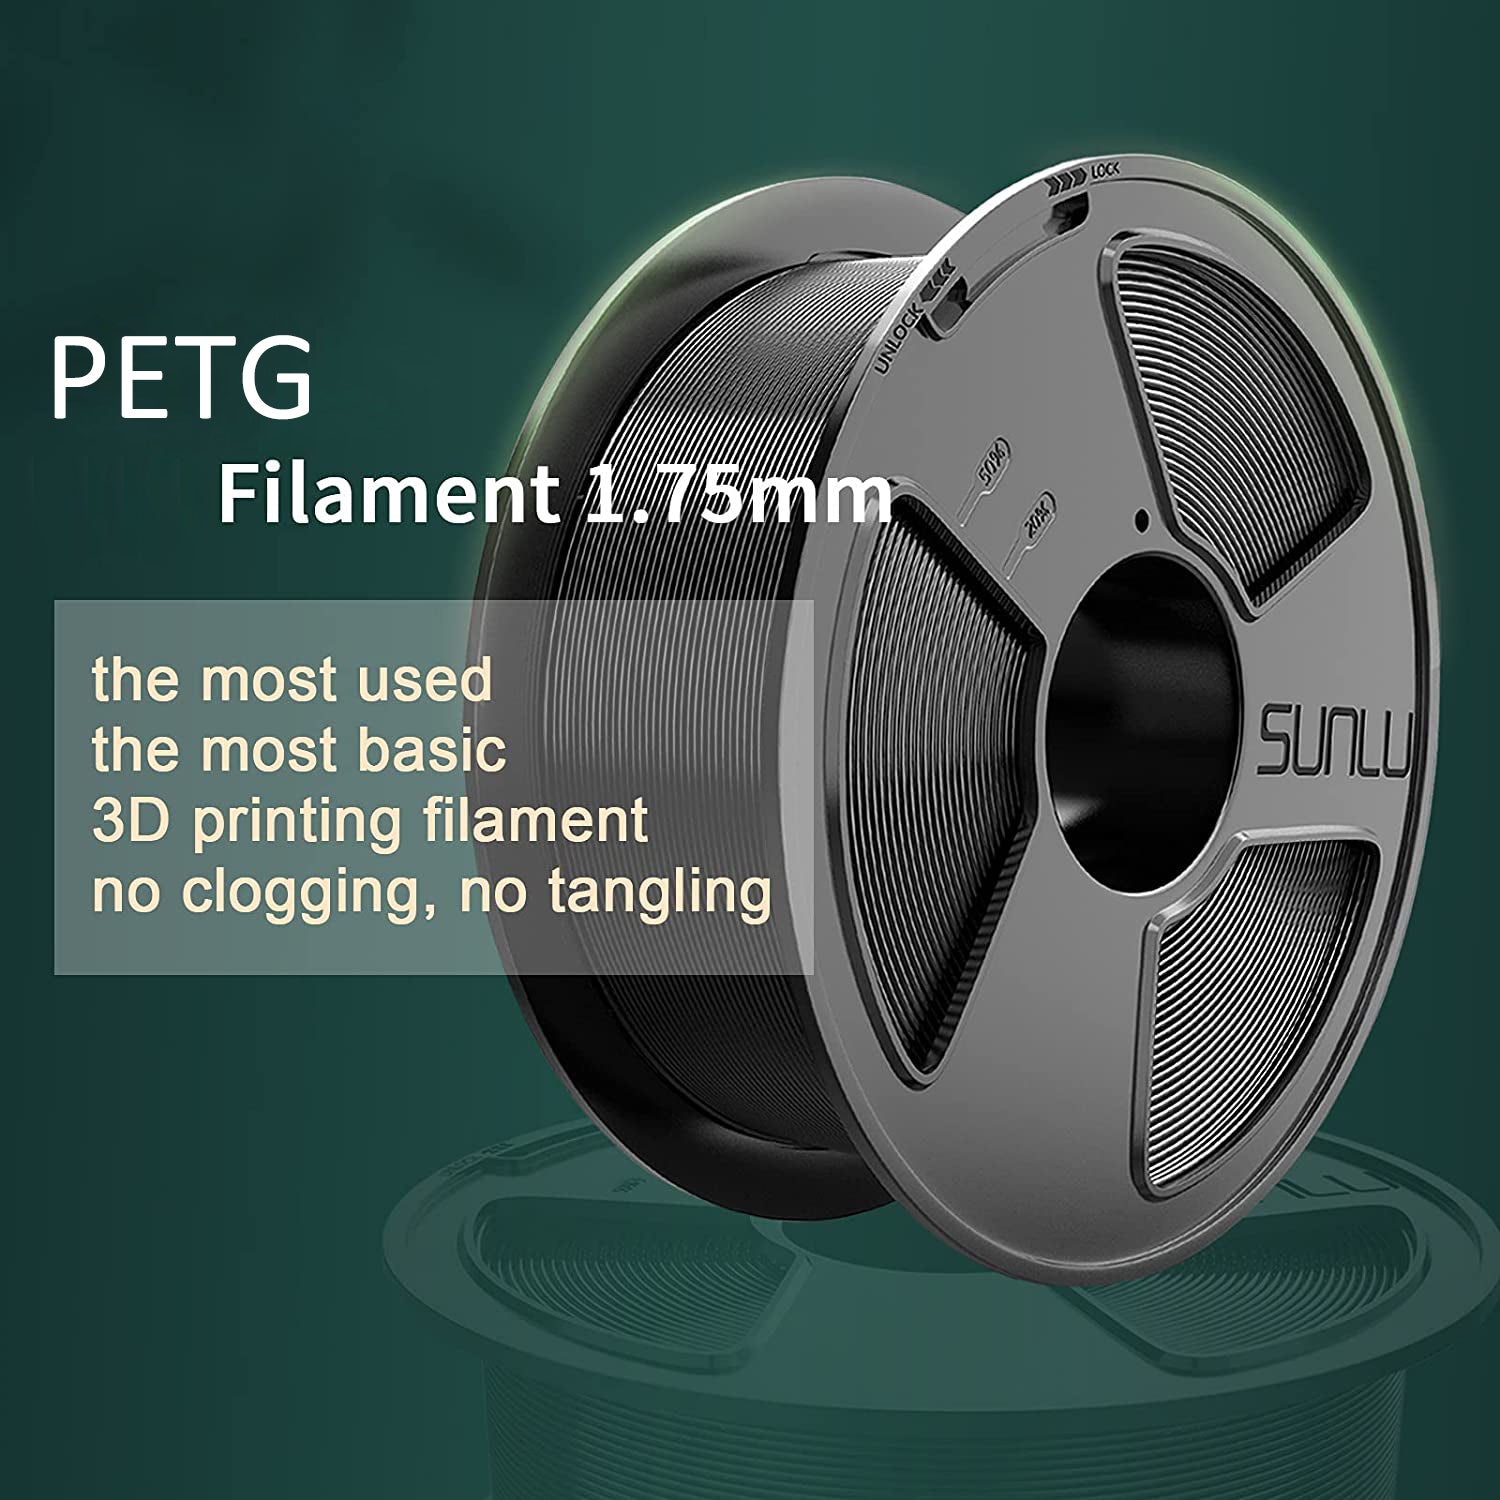  SUNLU 3D Printer Filament, Toughness PETG Filaments